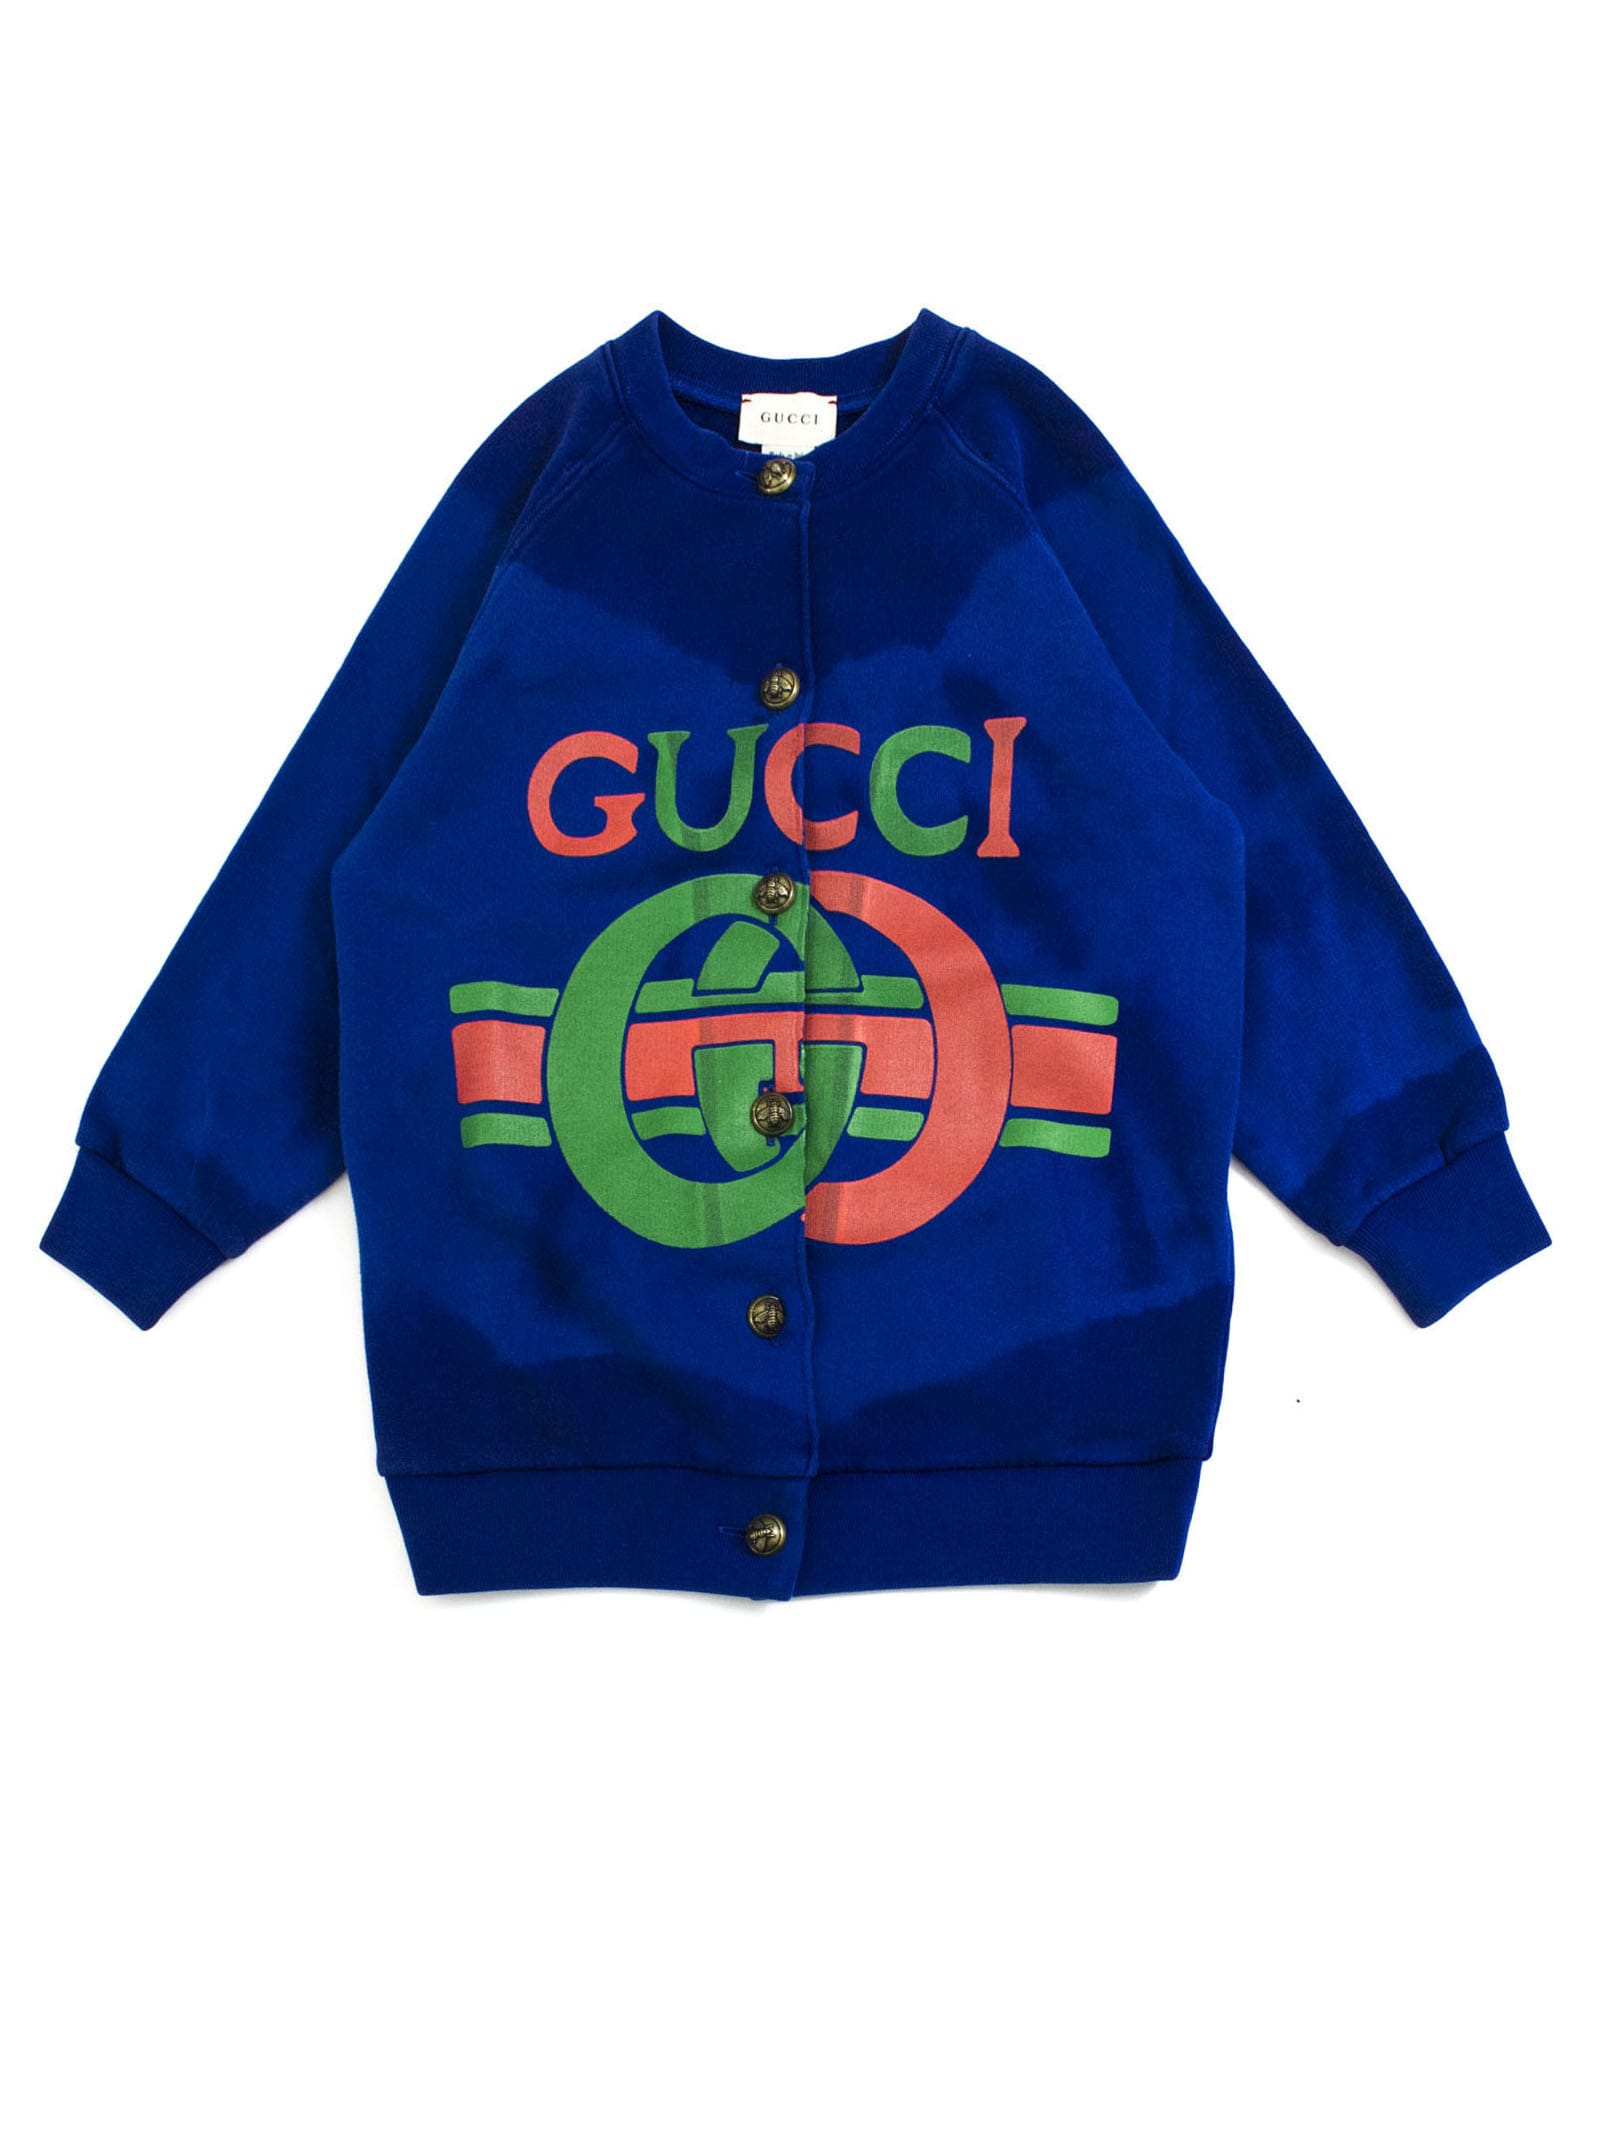 Gucci Blue Cotton Jersey Sweatshirt